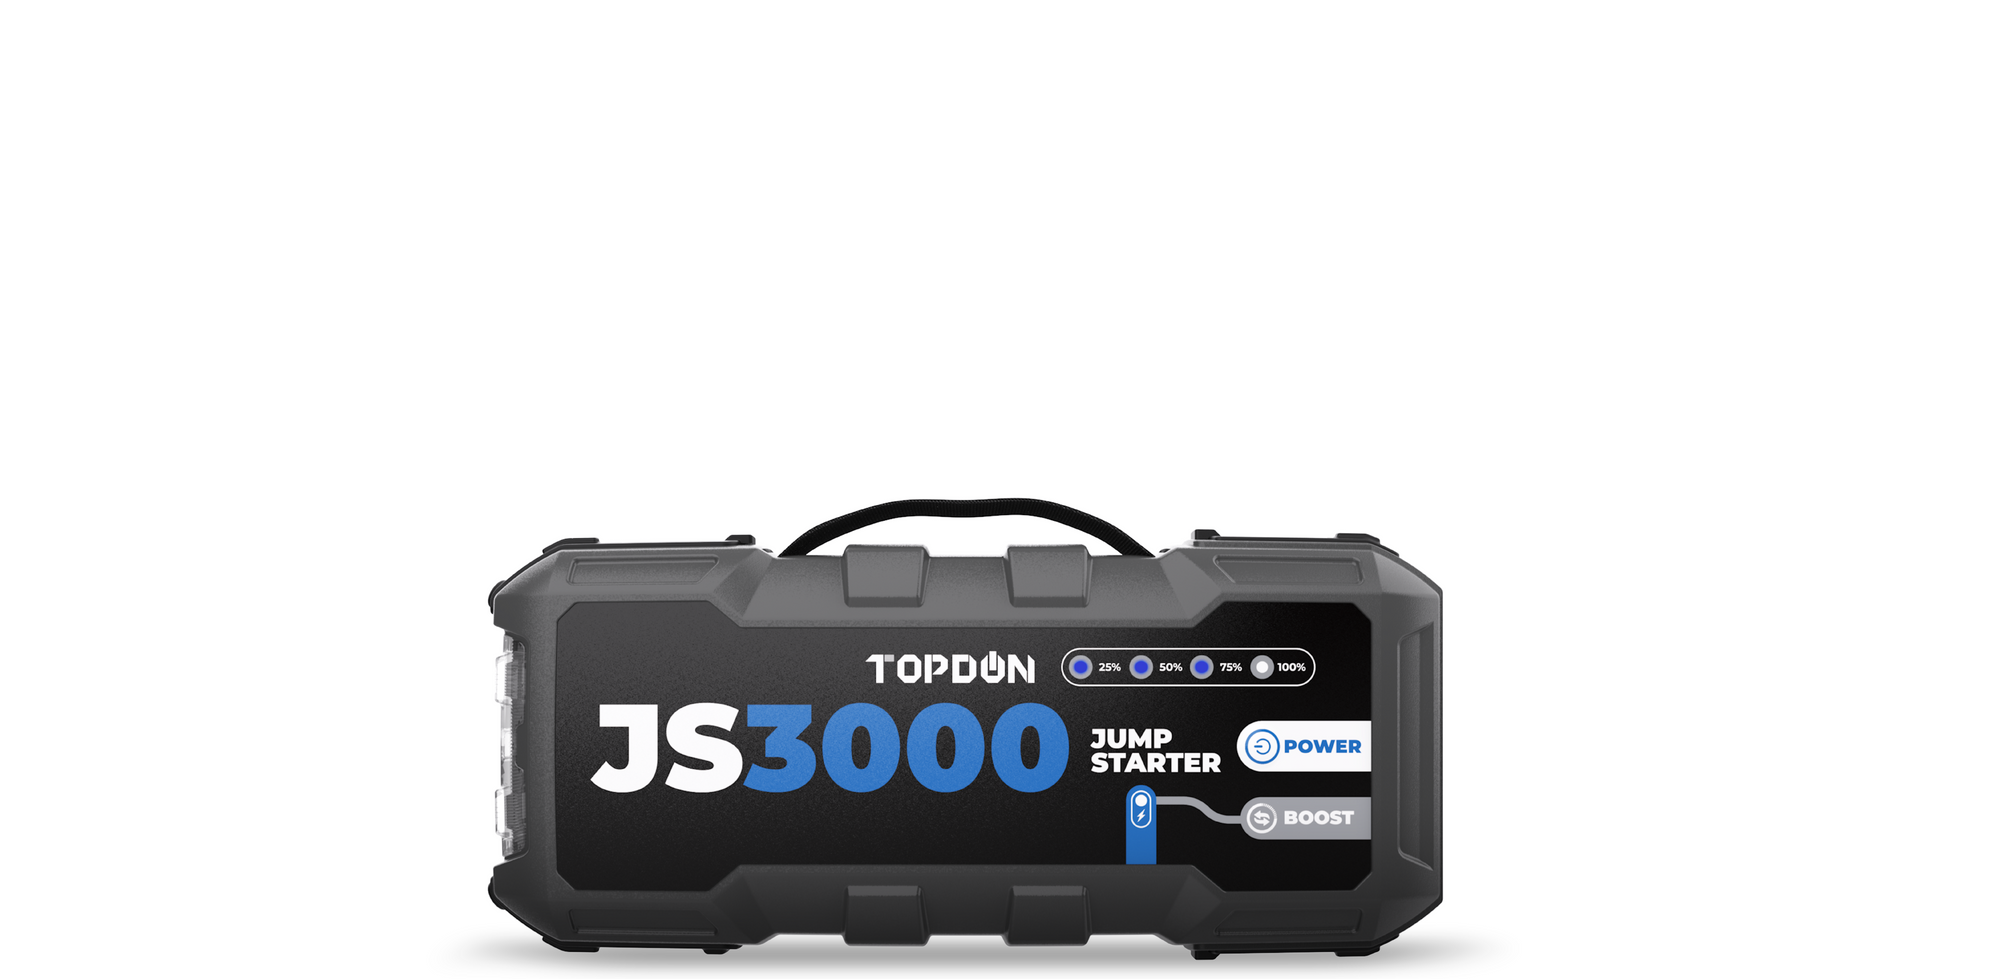 TOPDON Releases JumpSurge 3000®  